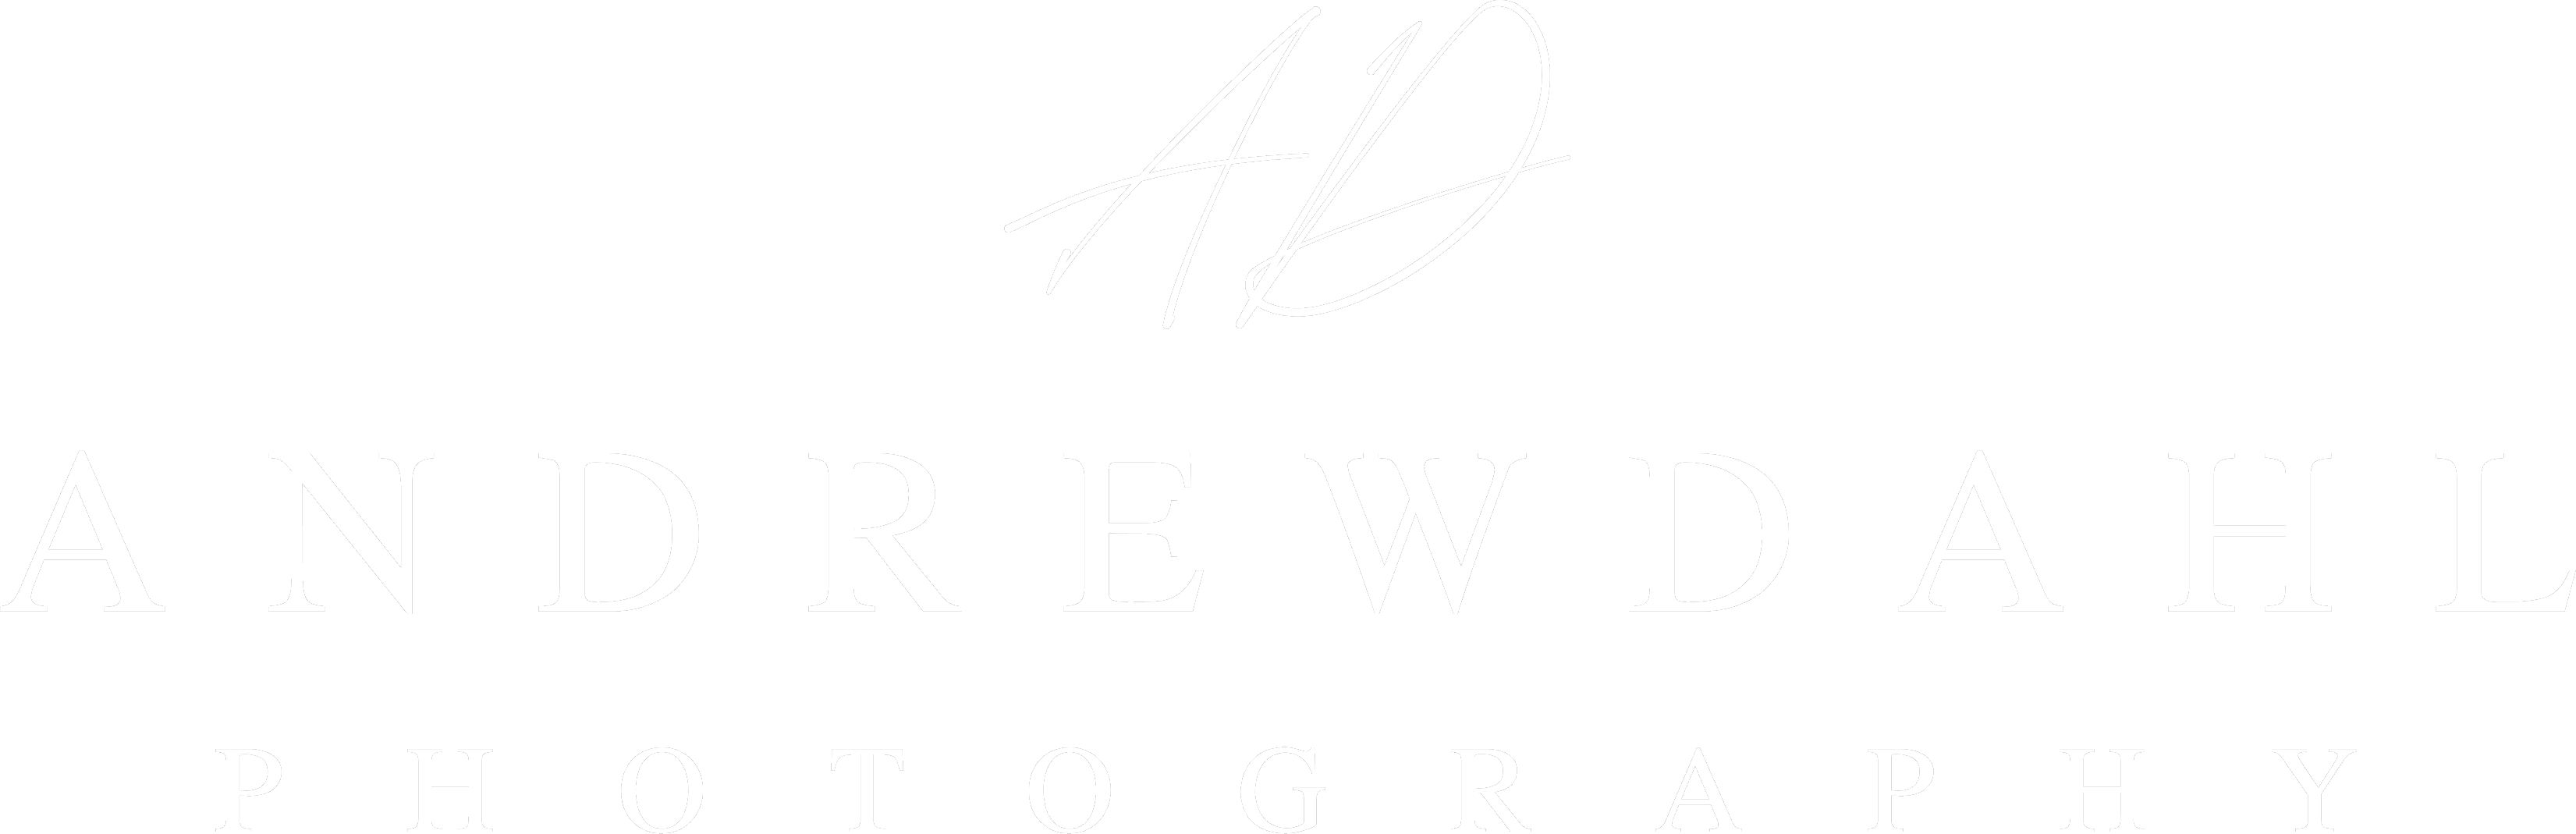 Andrew Dahl Logo